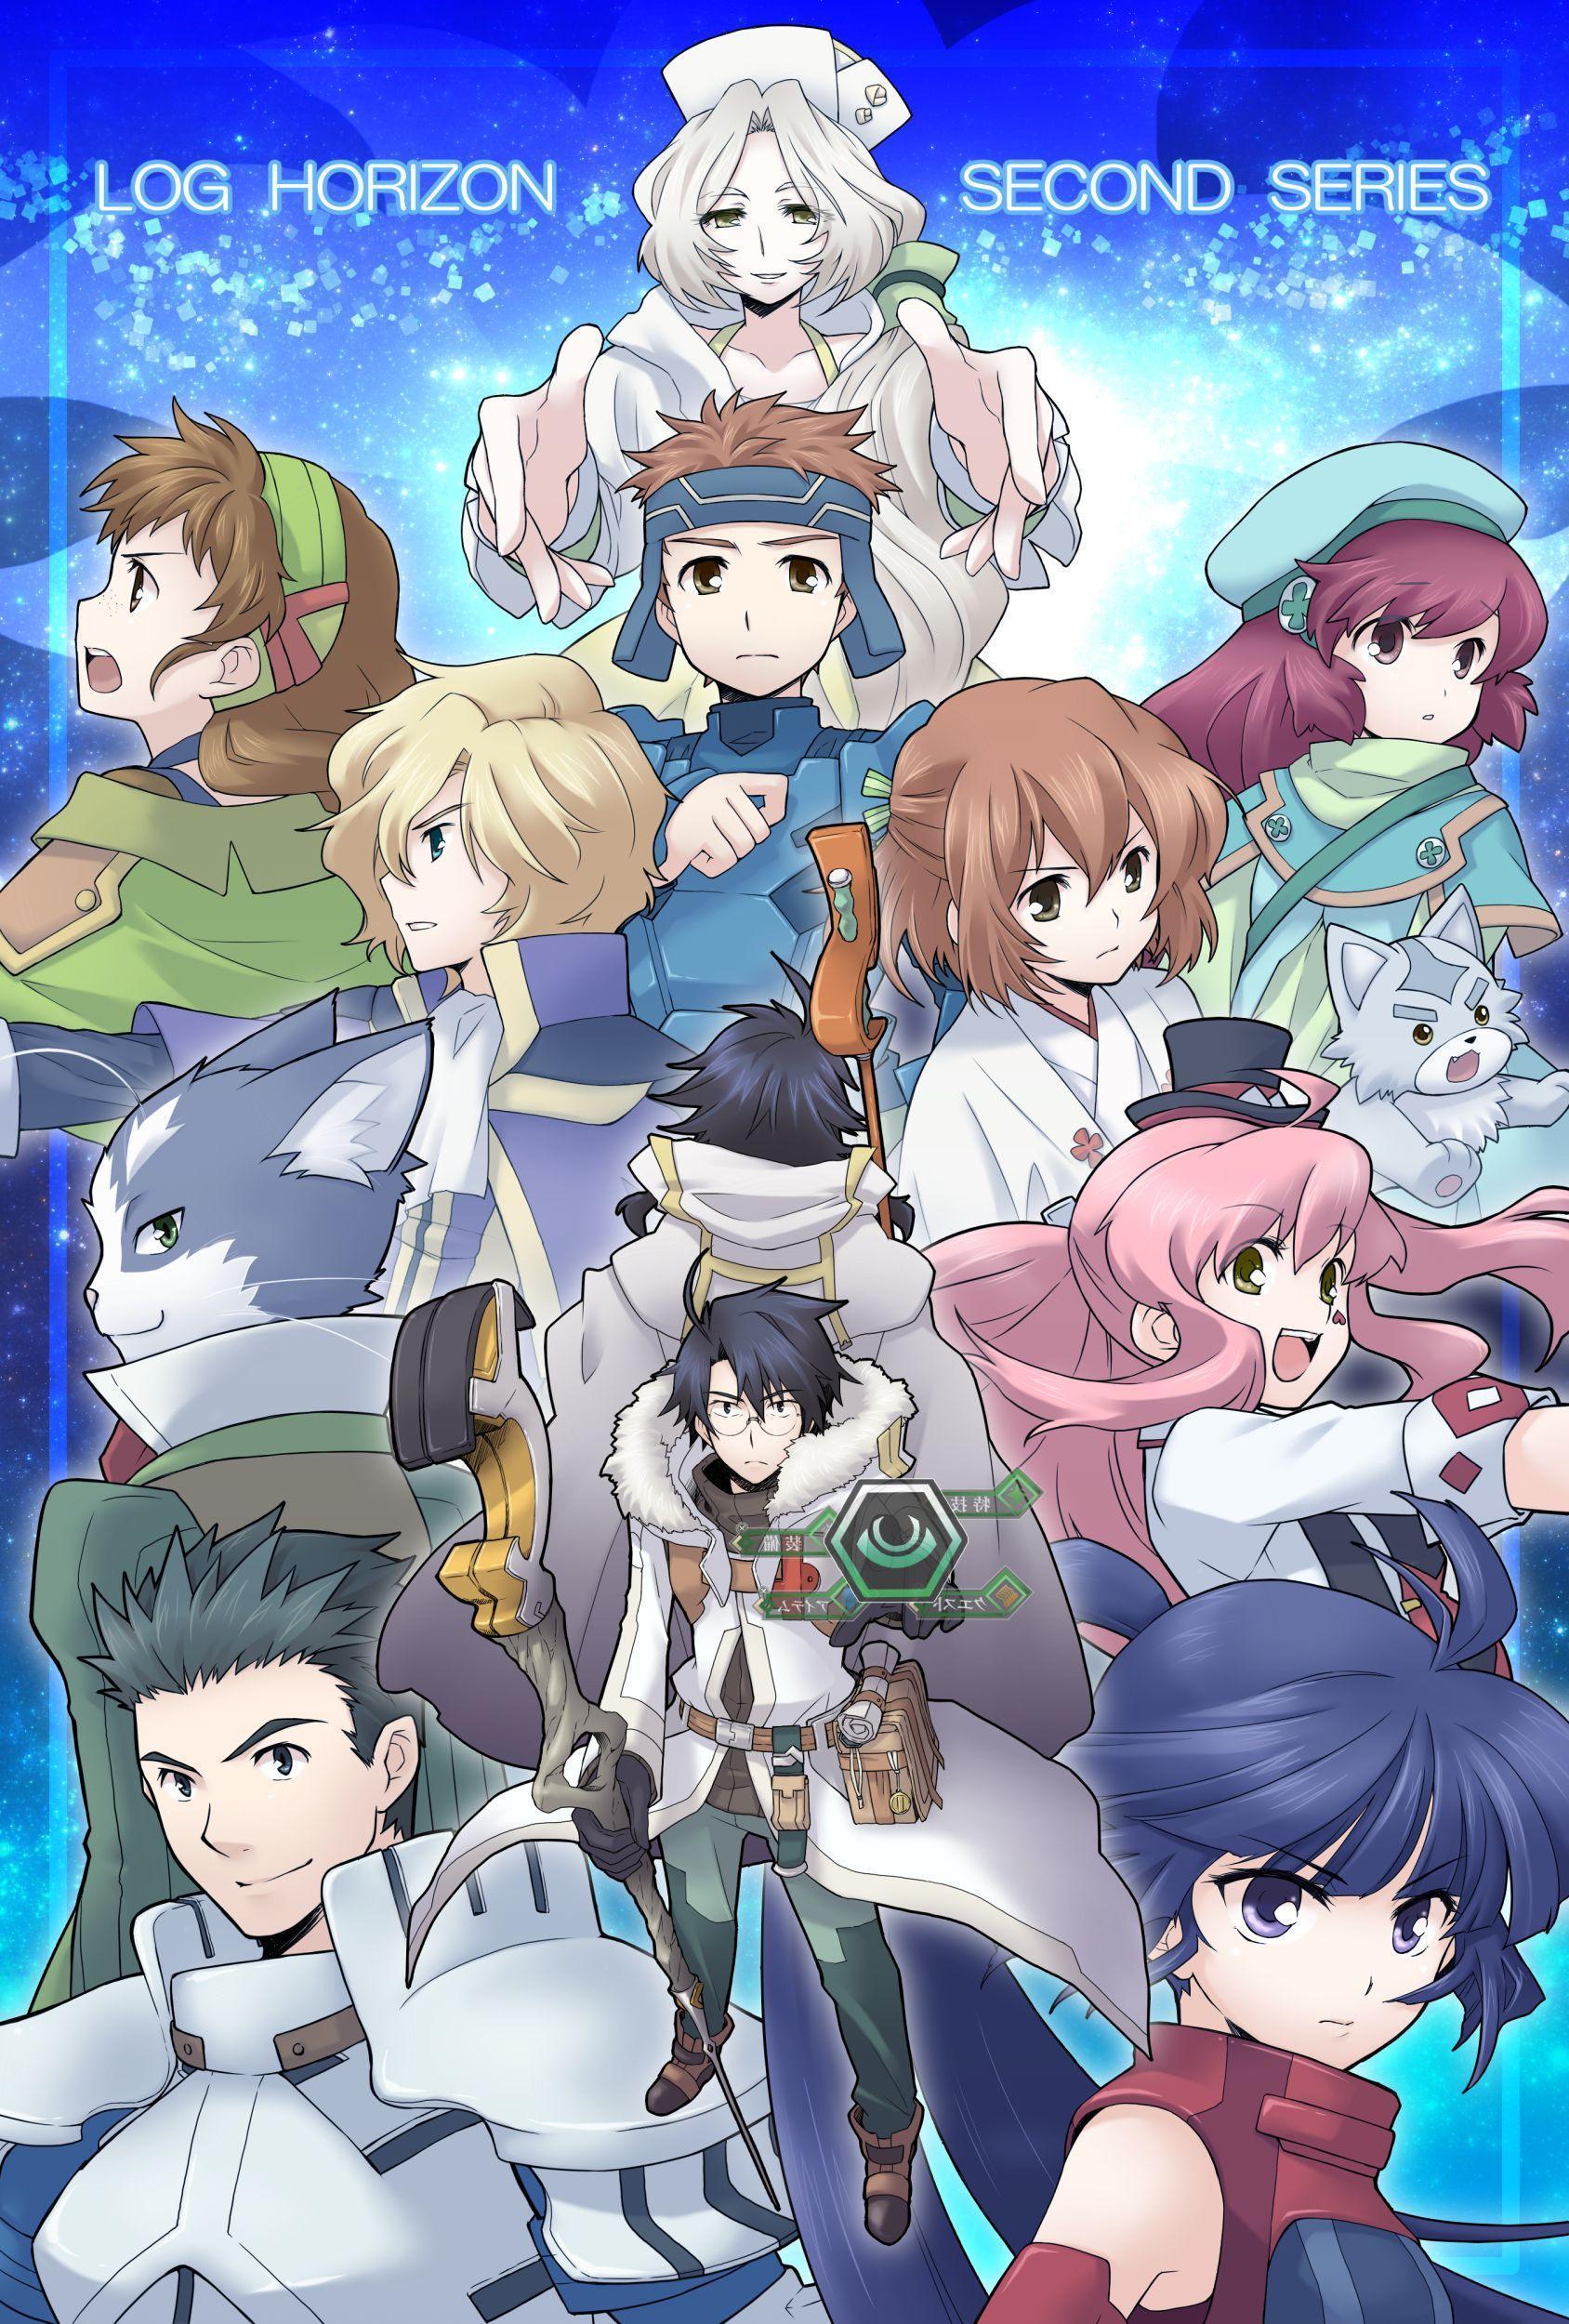 Akatsuki (Log Horizon) Anime Image Board